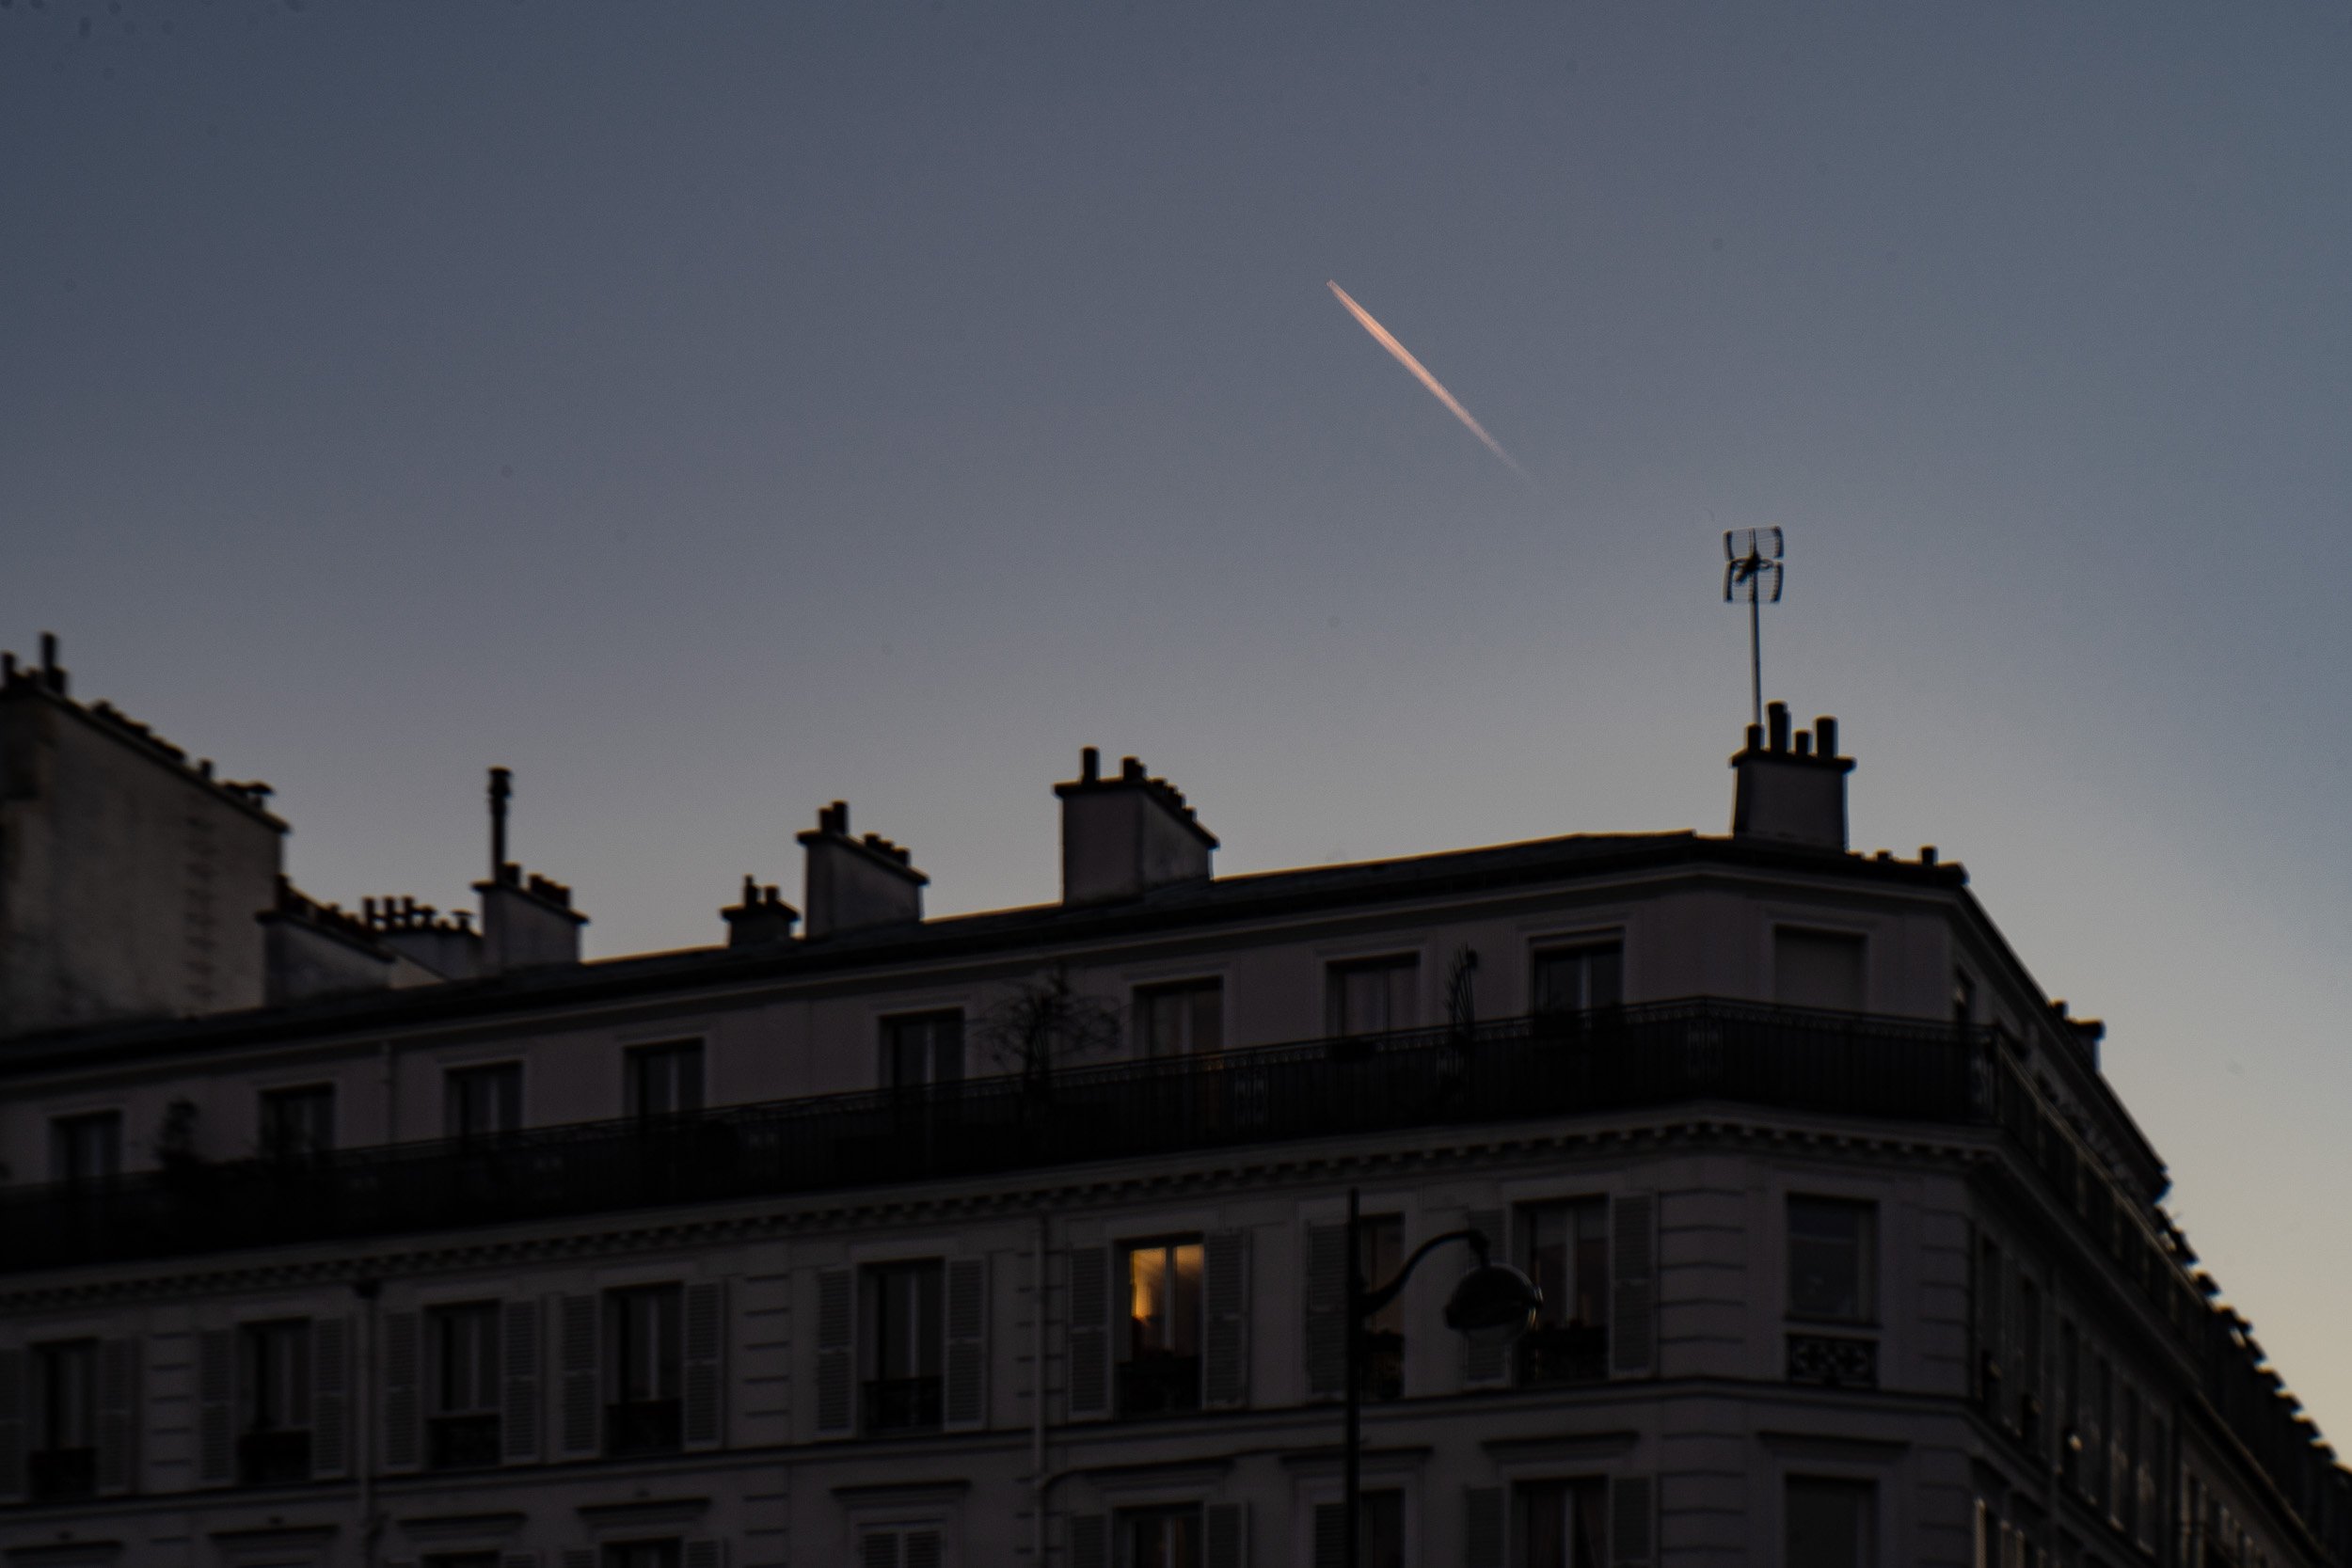 024-trace-of-plane-evening-sky.jpg